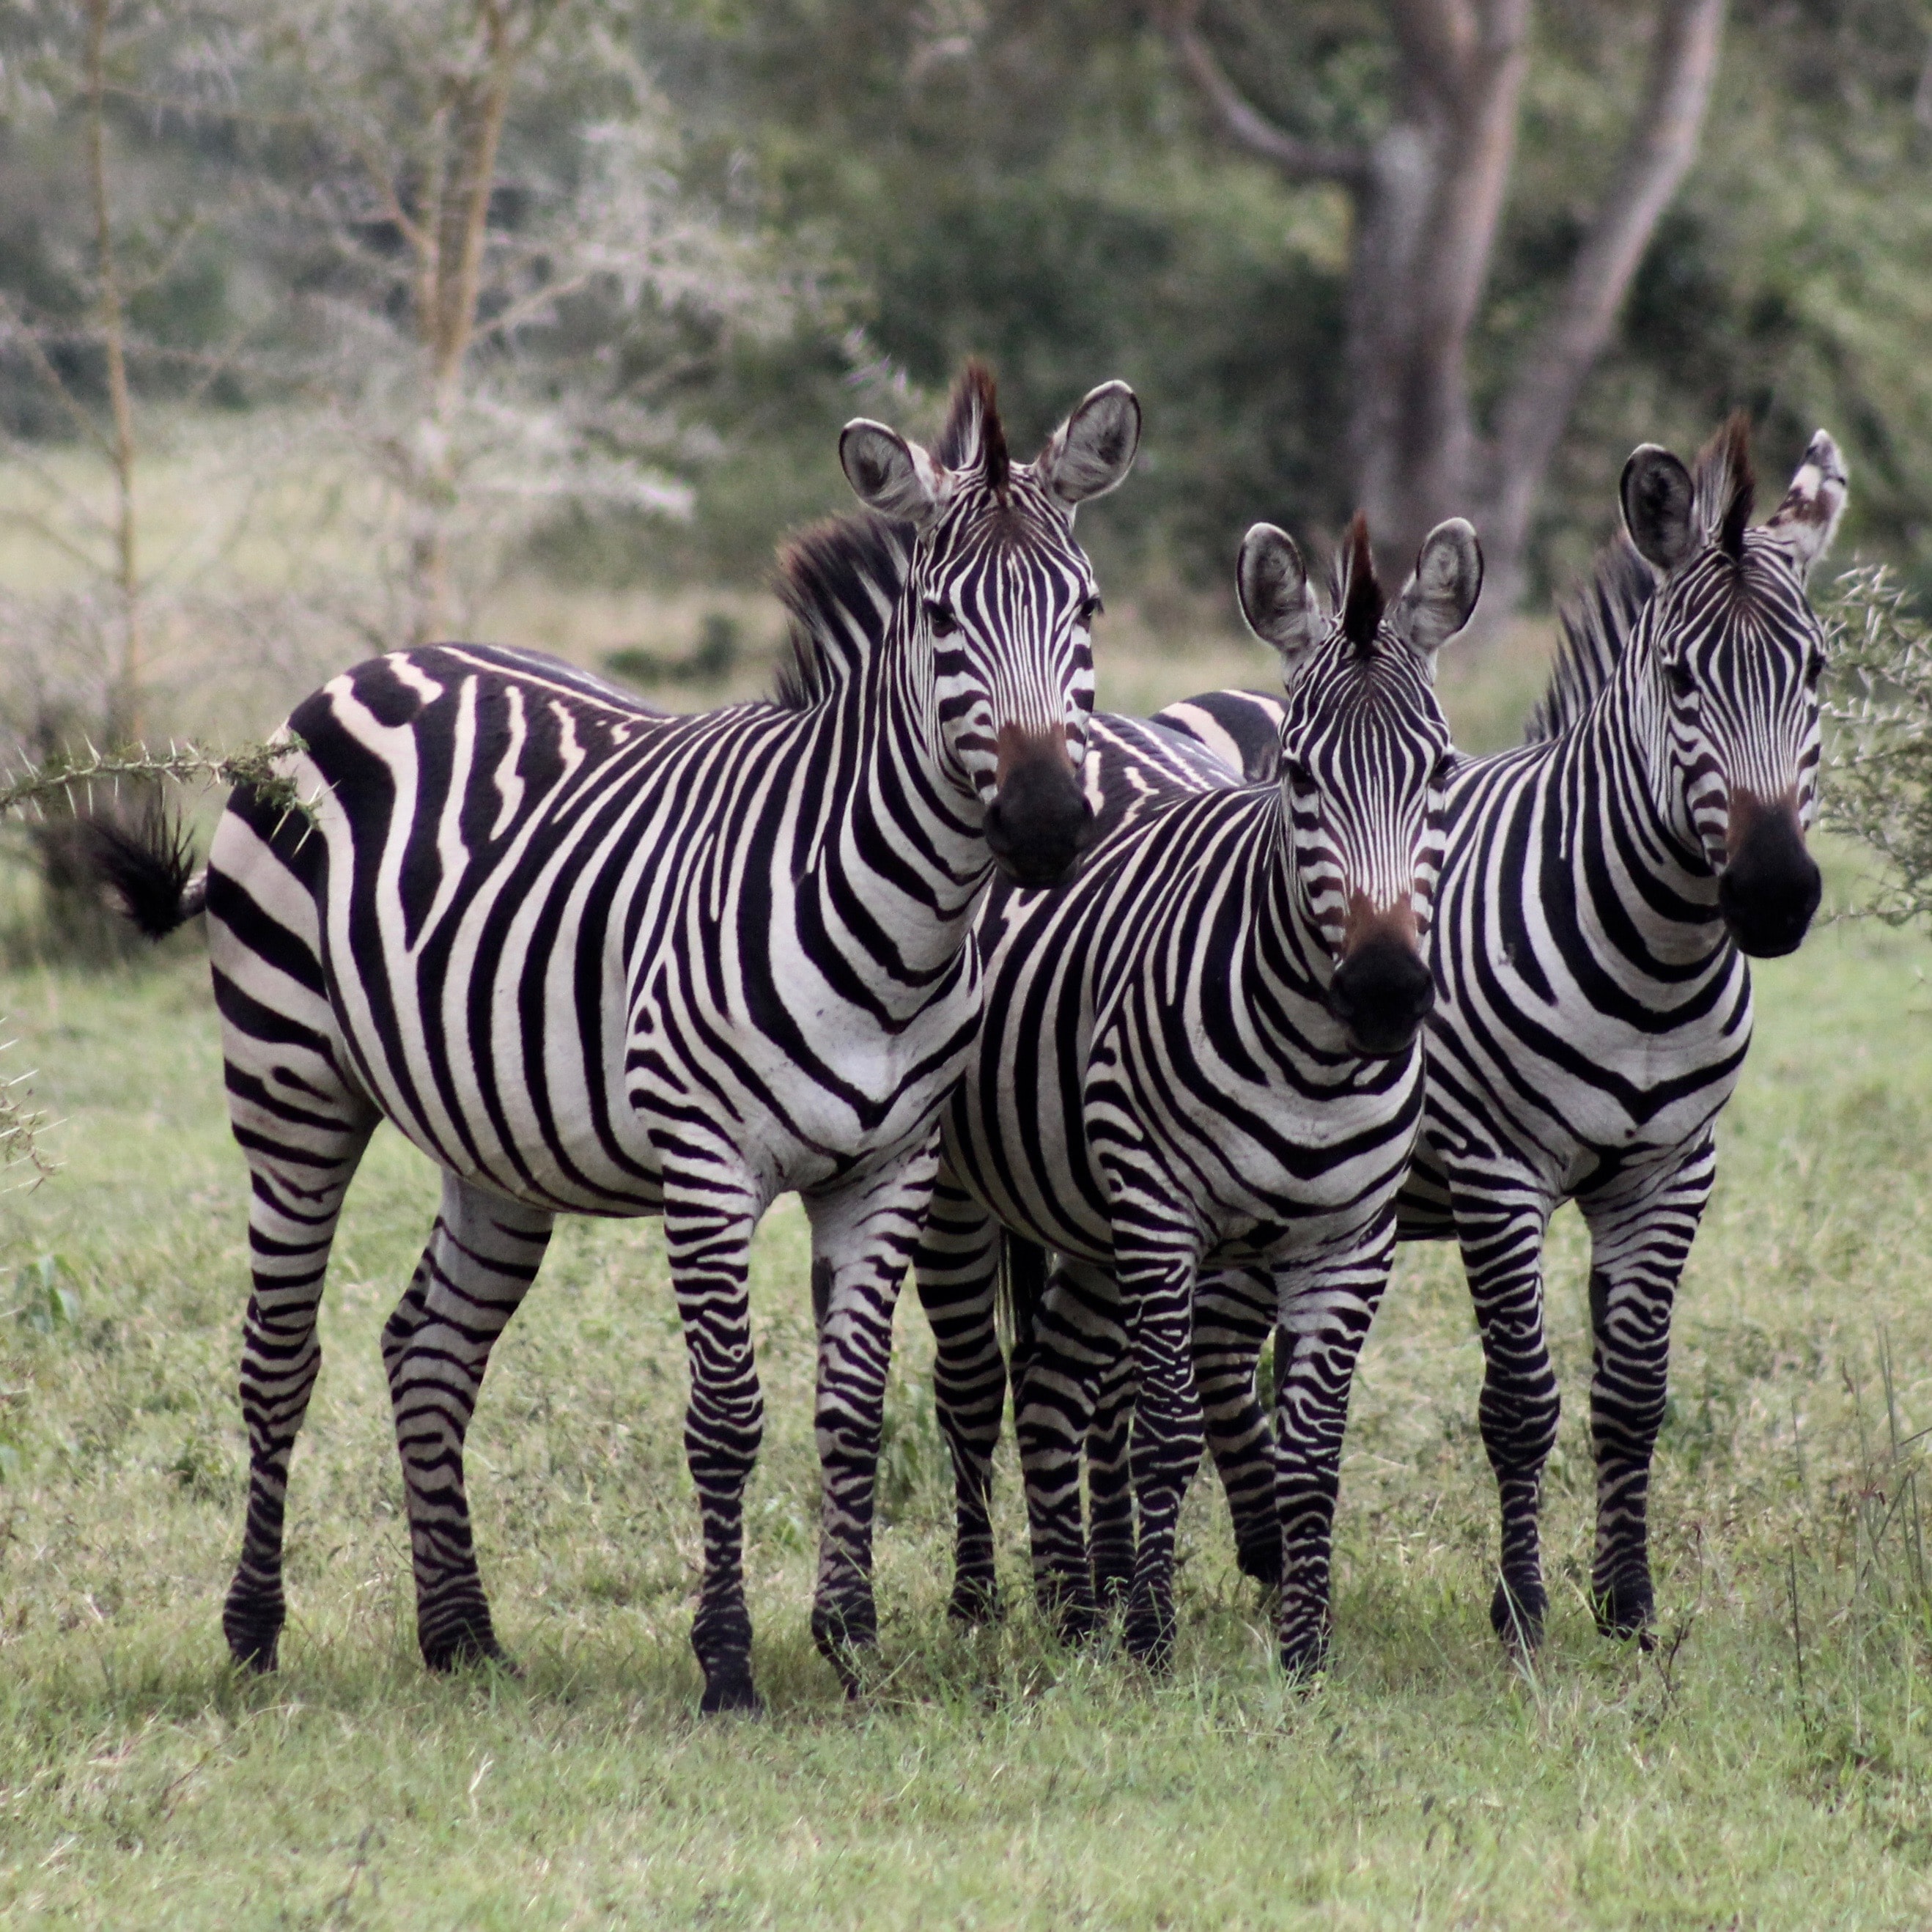 Zebras from Unsplash